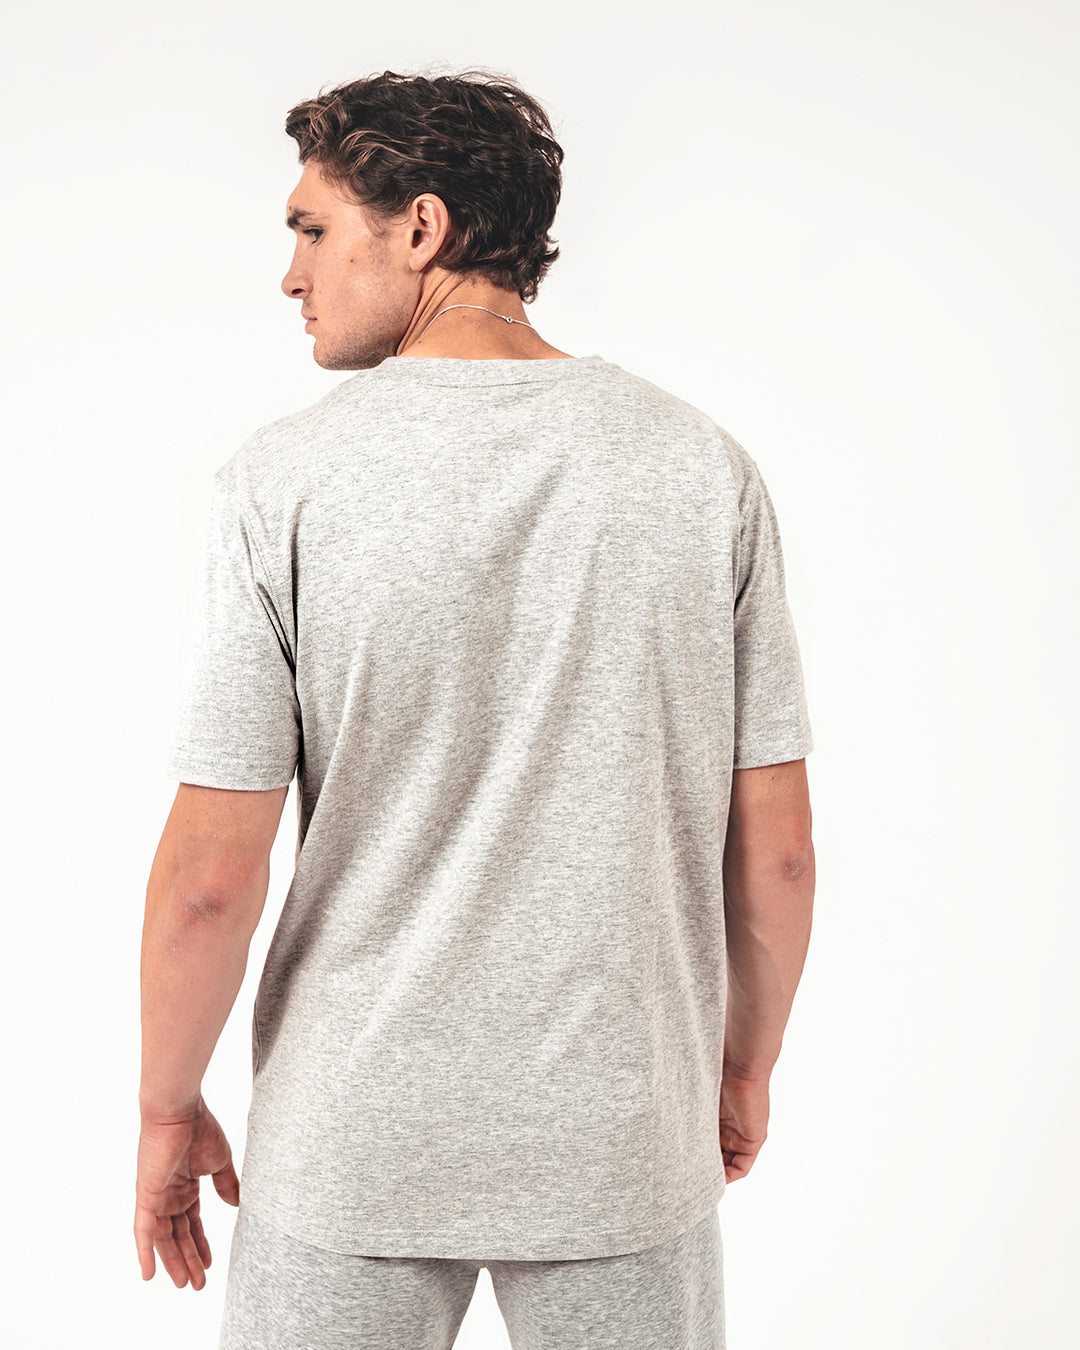 PFC: 002-1 - Men's T-Shirt - Grey Marl